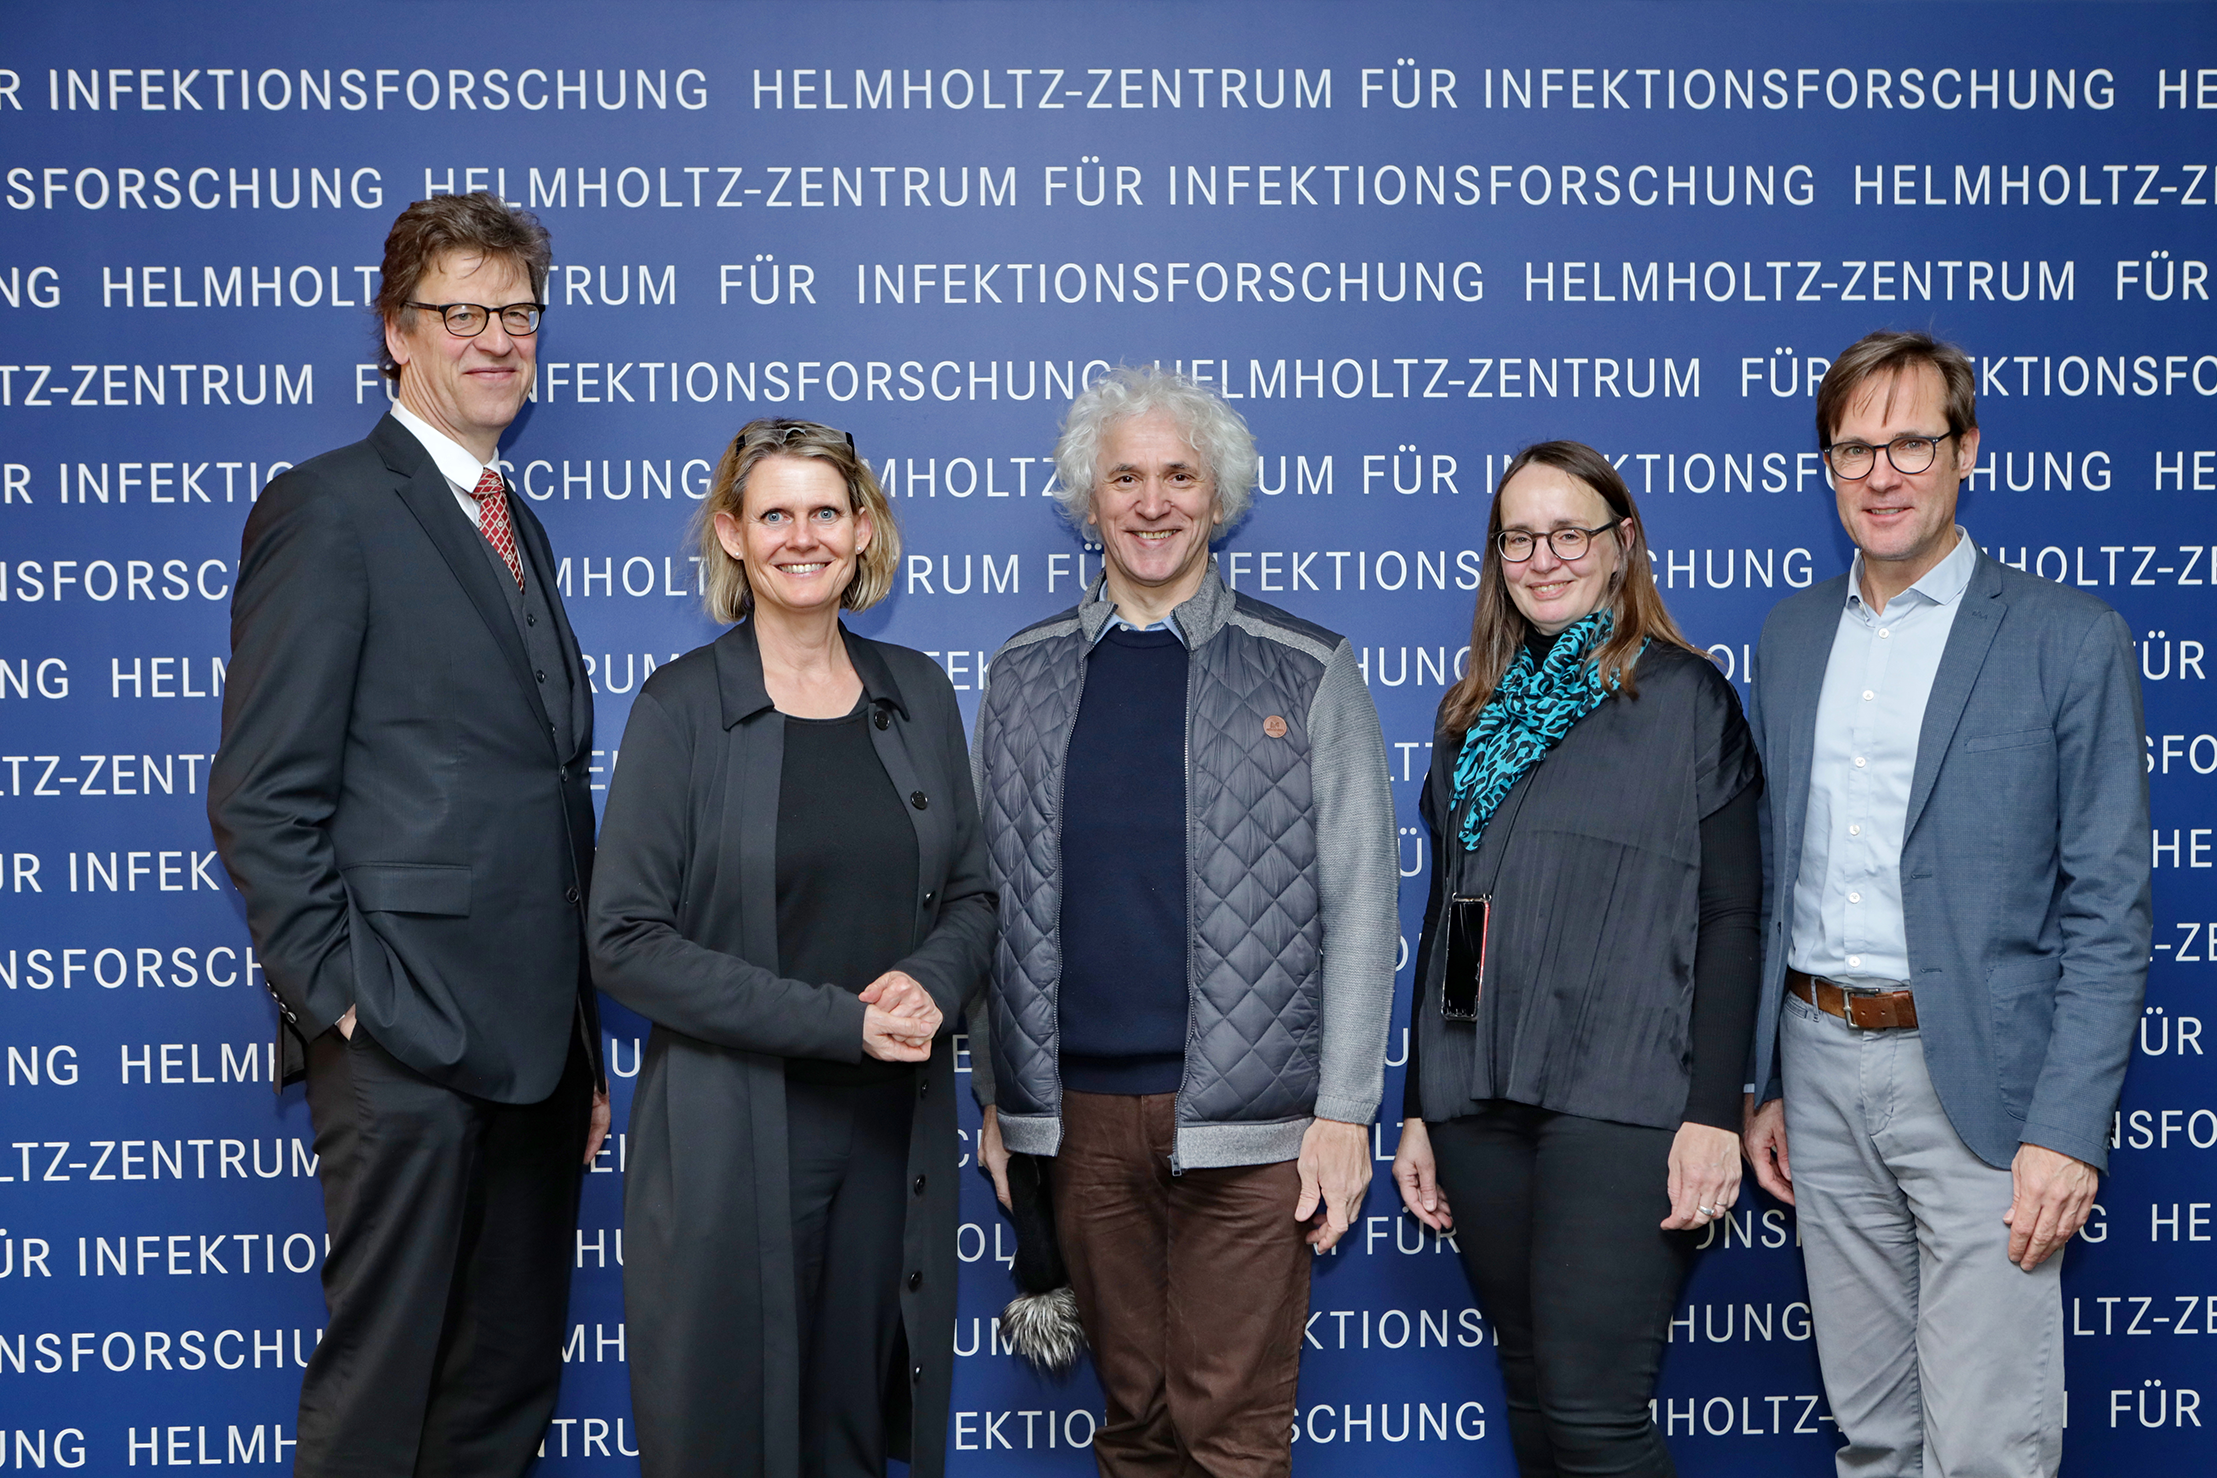 (left to right) Christian Scherf, Judith Pirscher, Josef Penninger, Theresia Stradal, Thomas Pietschmann